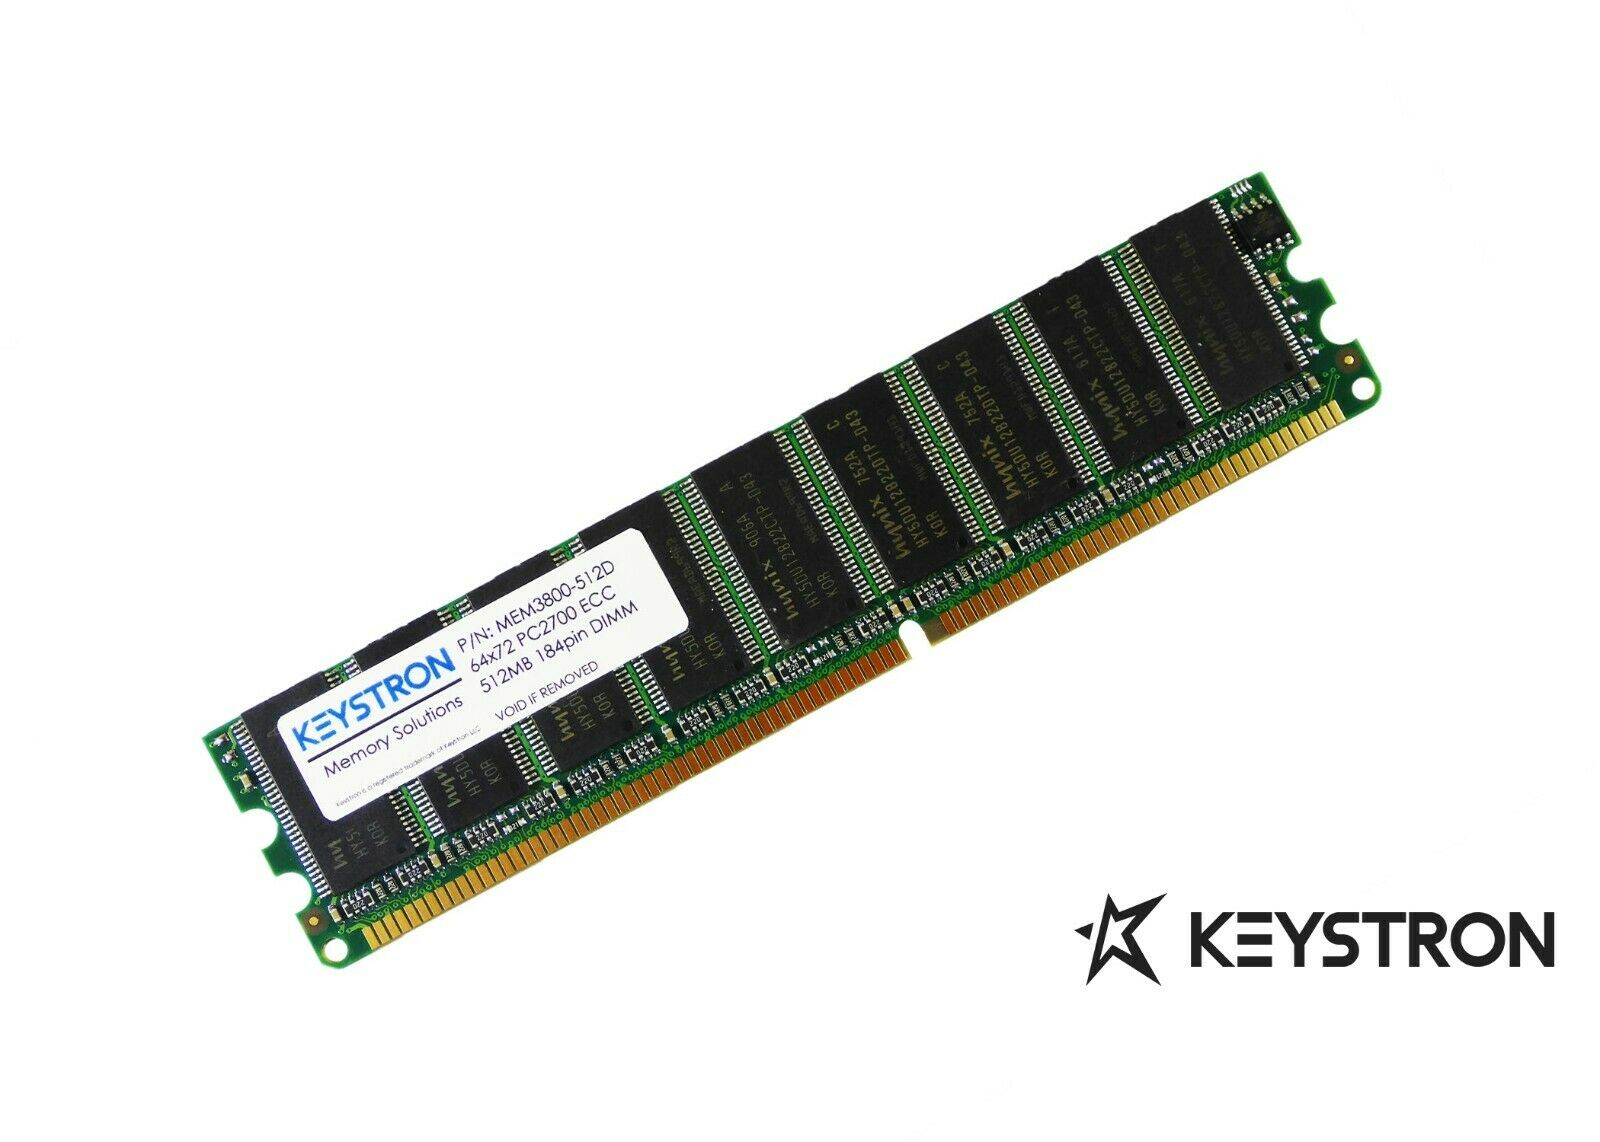 Mem3800-512d 512mb Dram Memory Upgrade For Cisco Router 3825 3800 3845